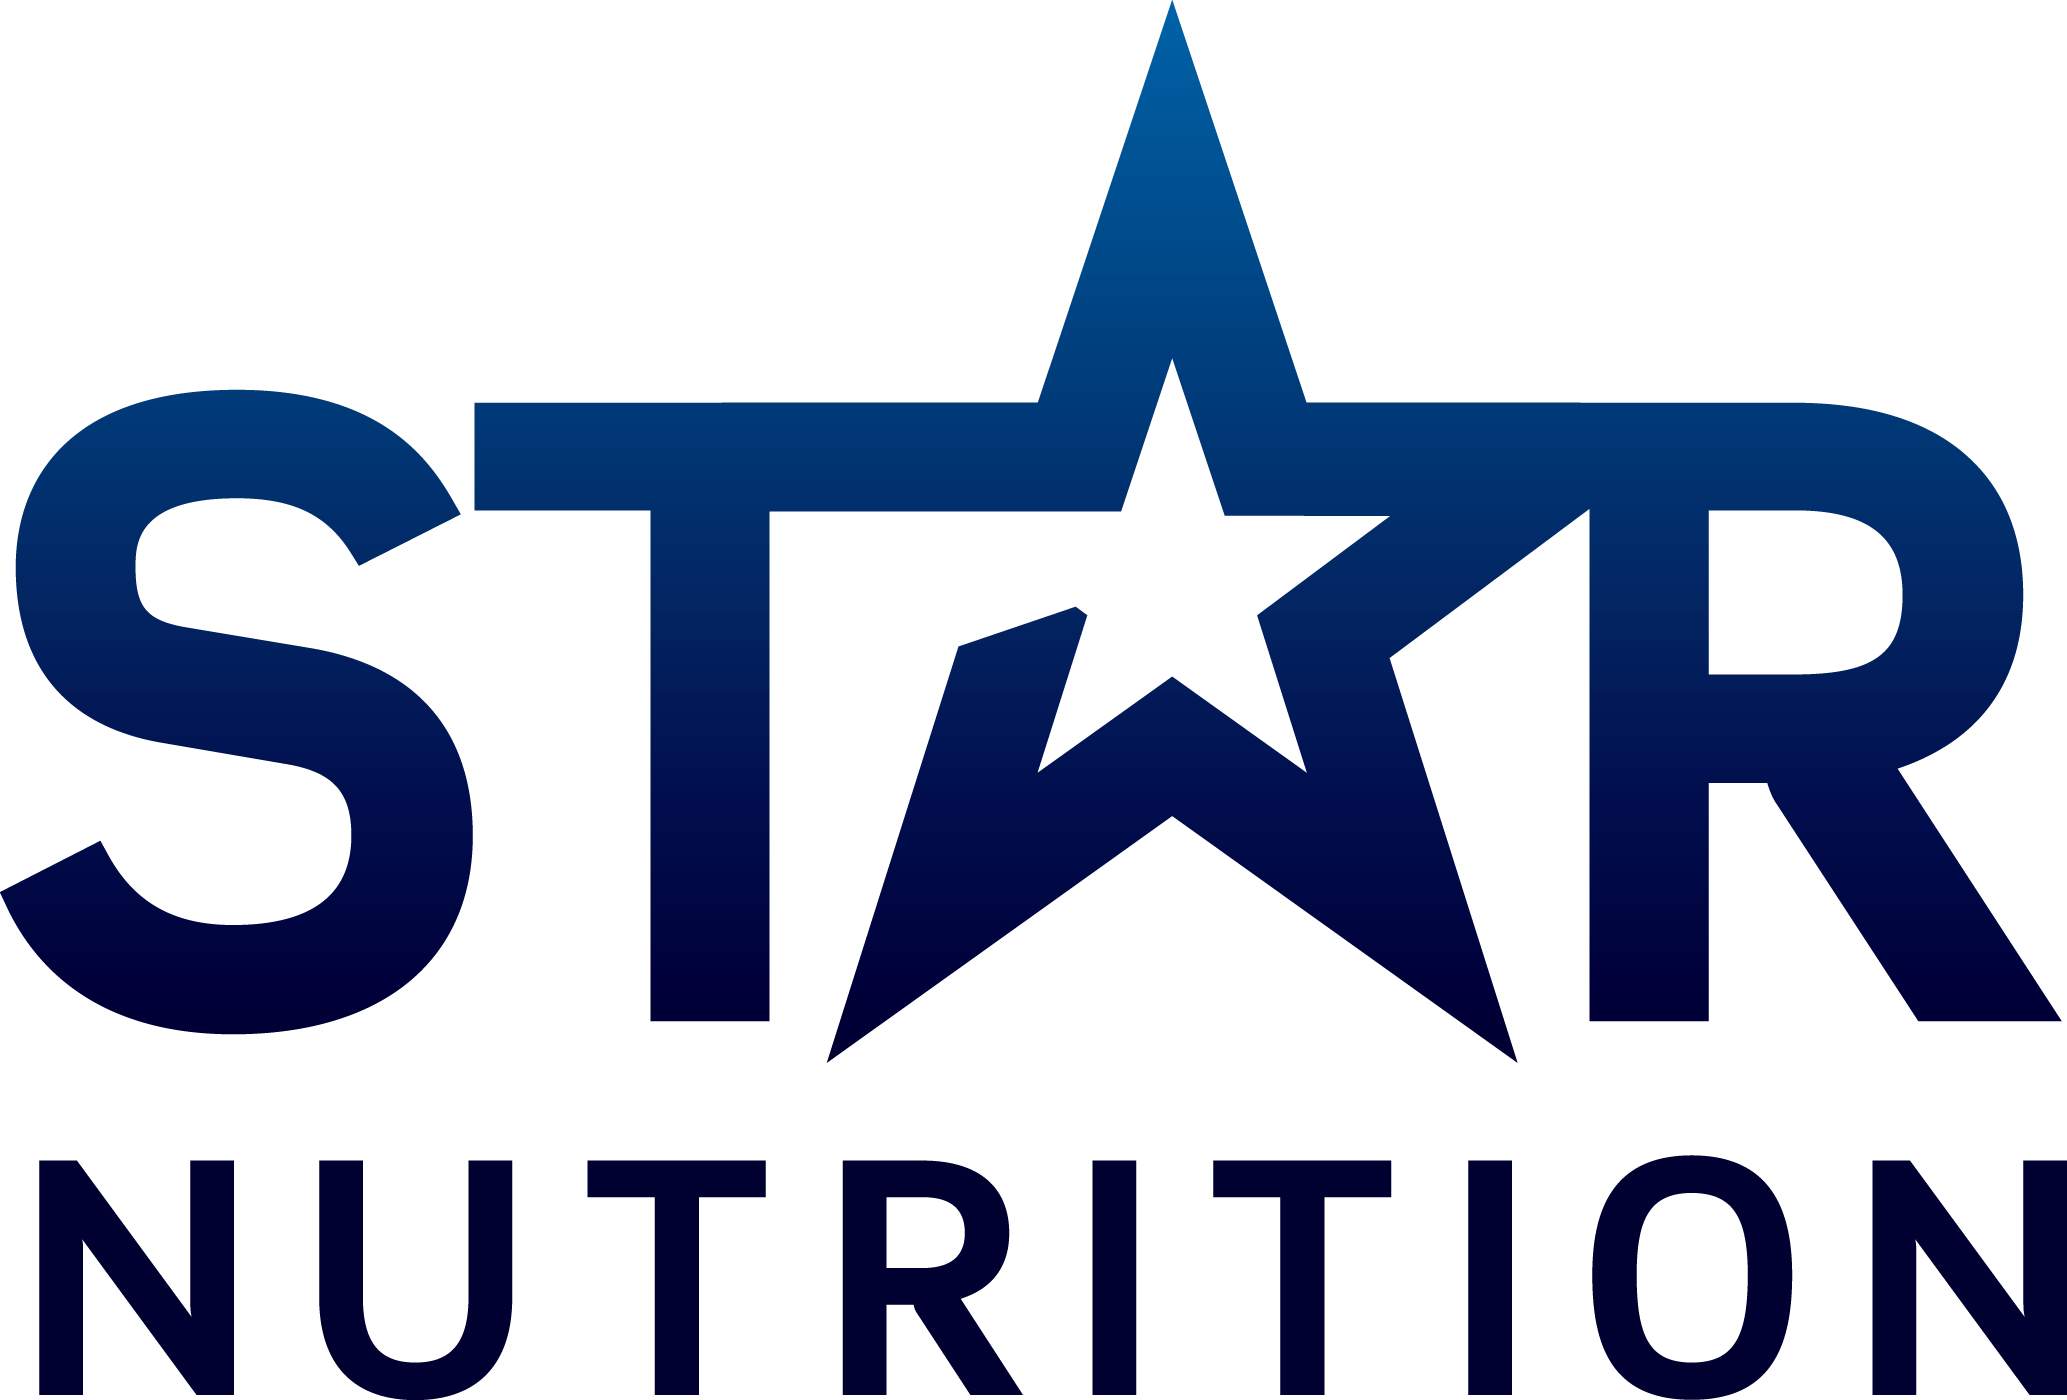 Star Nutrition